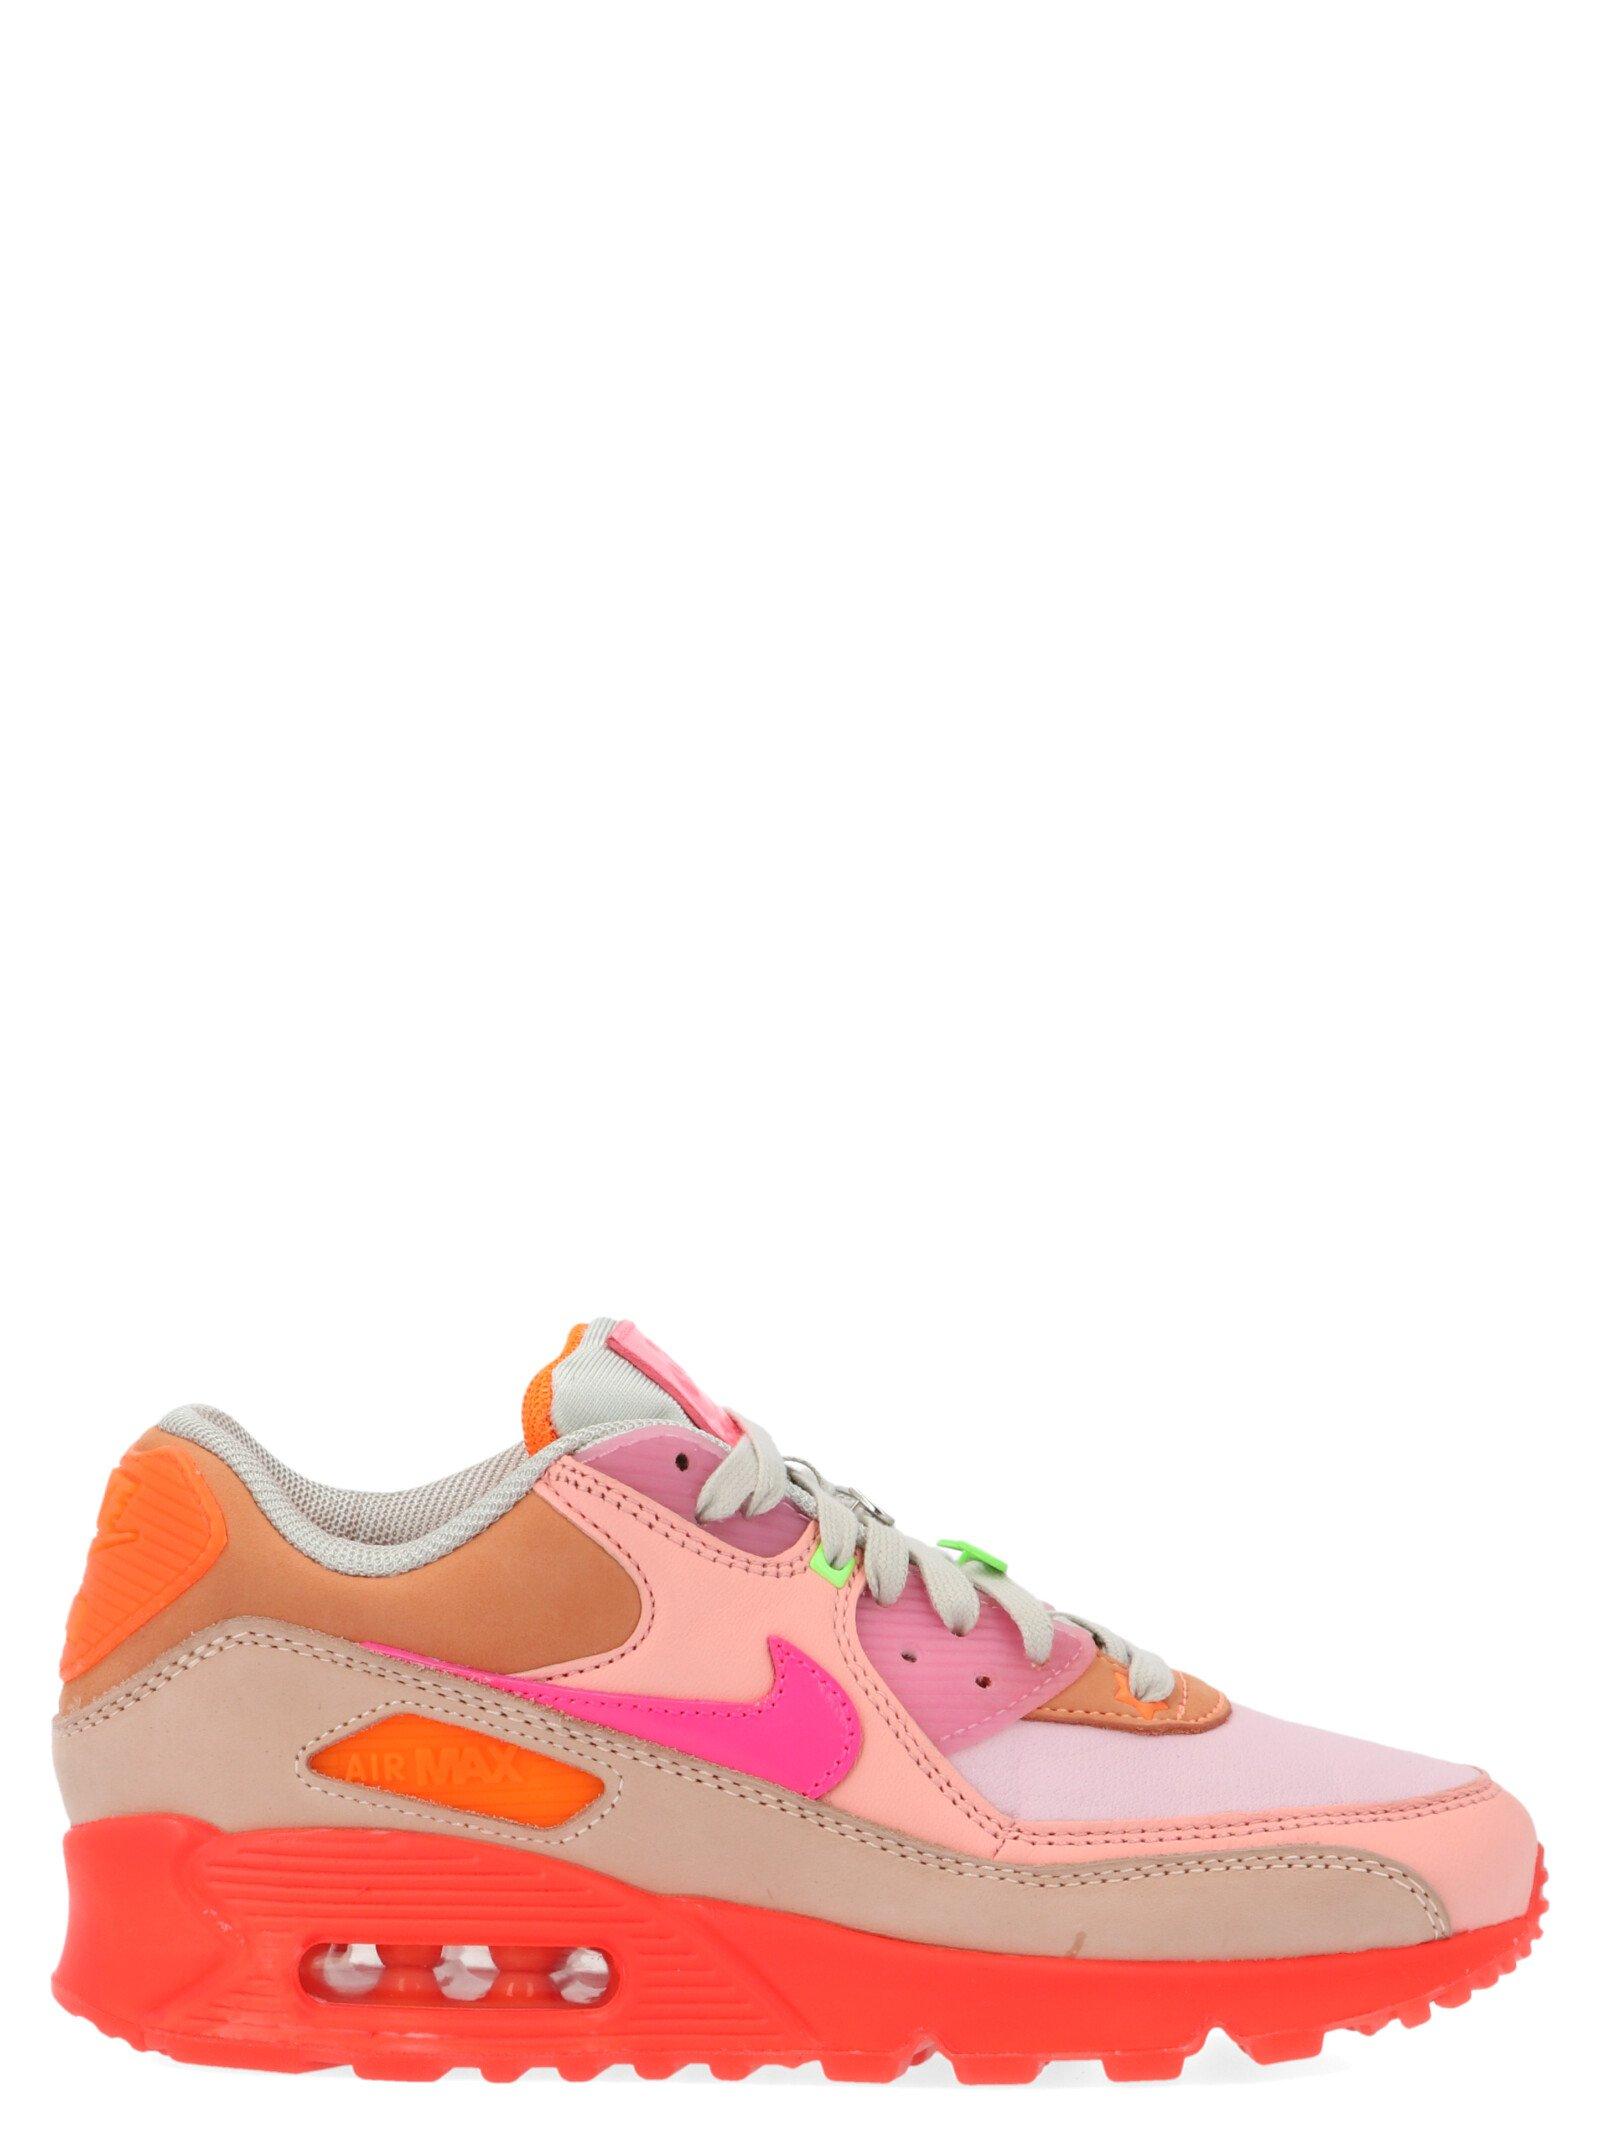 orange air max shoes